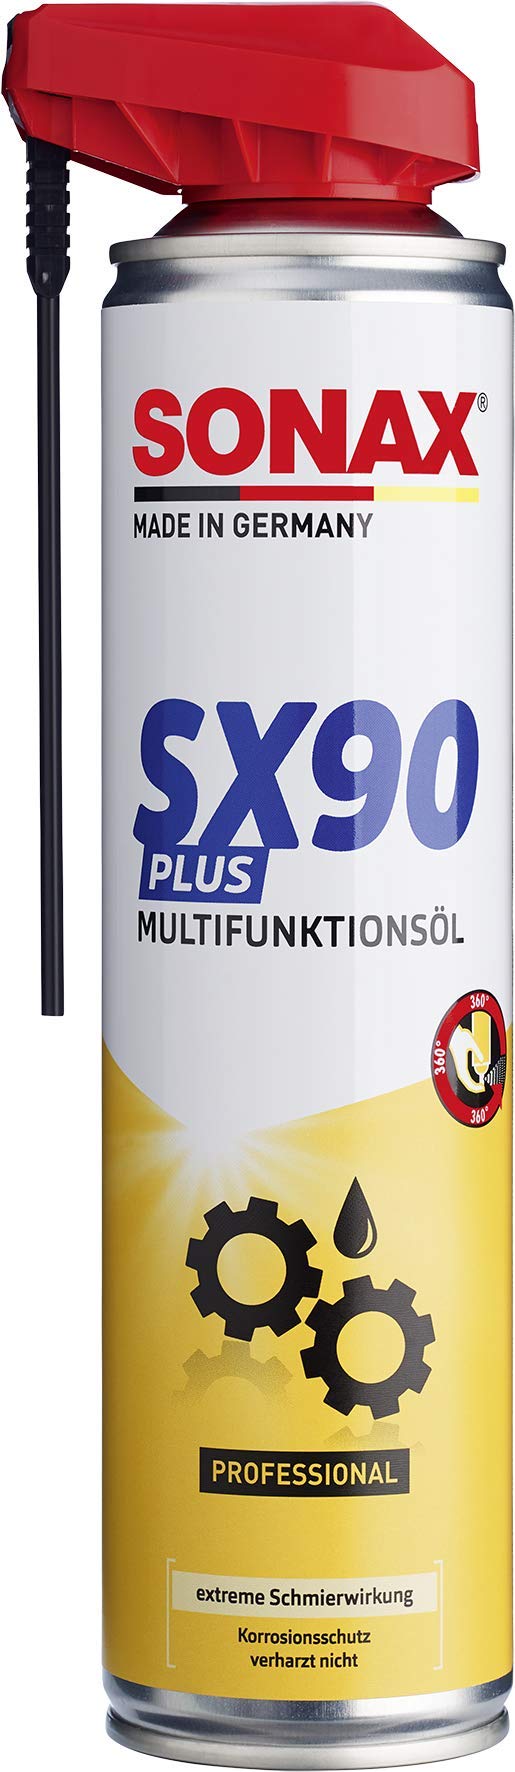 Sonax 90 Plus With Easyspray / SX04744000-055